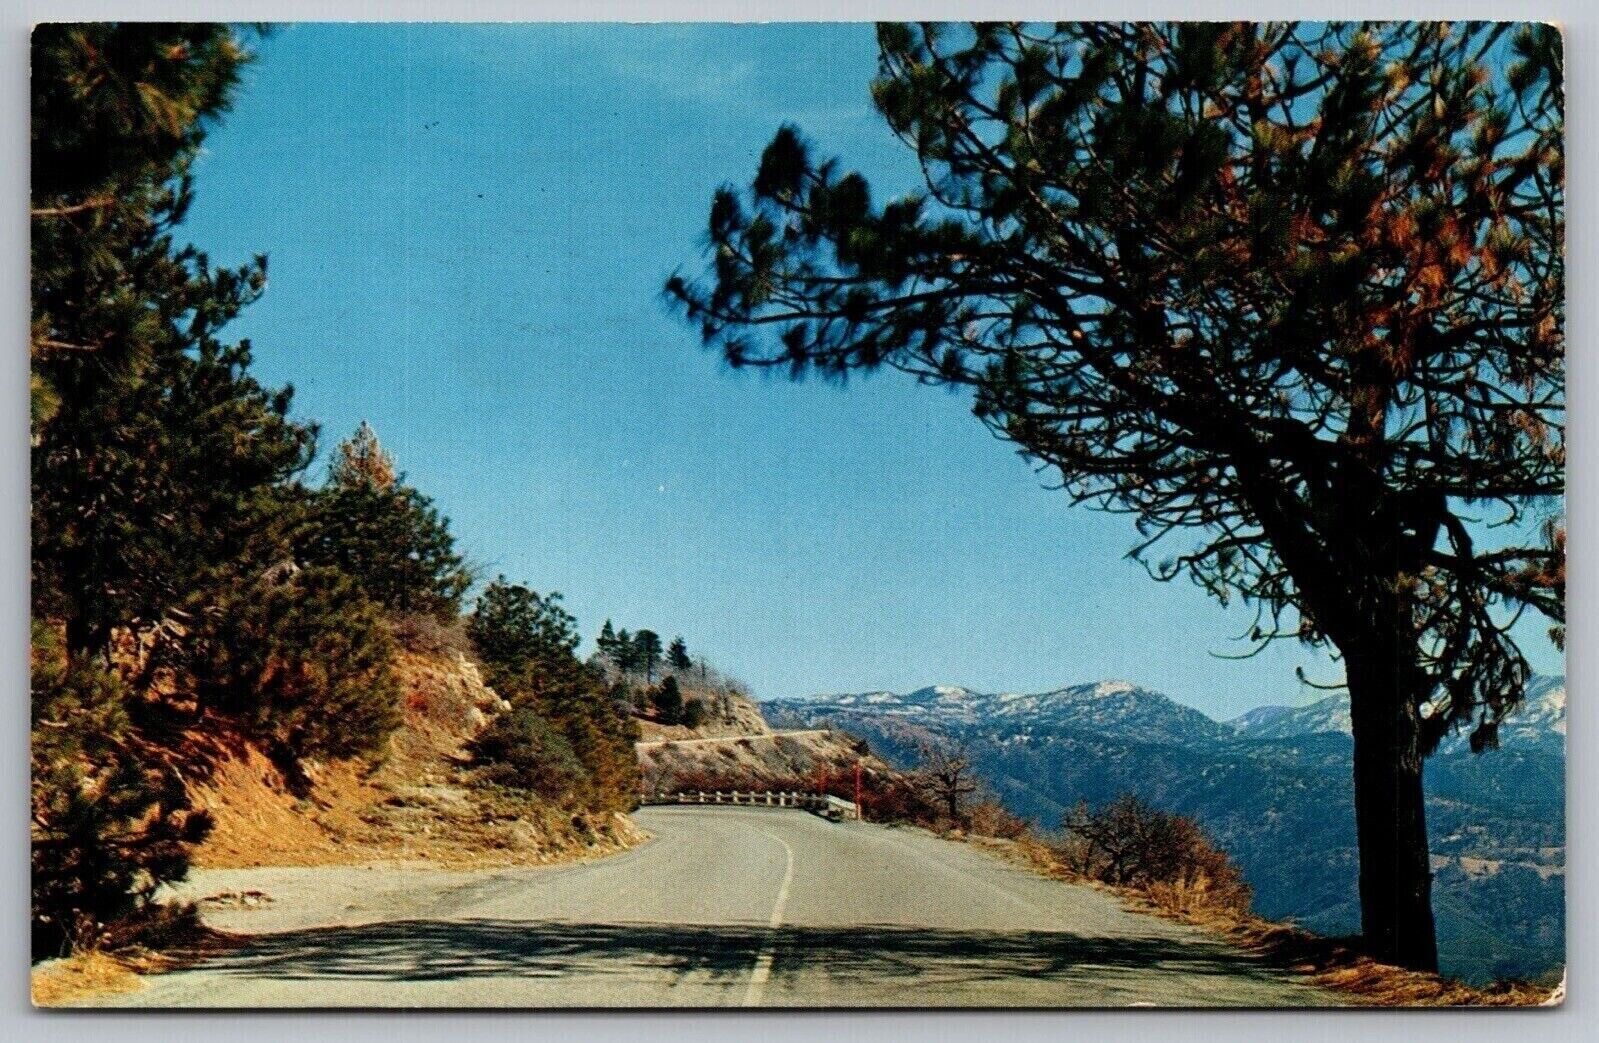 Rim World Drive High Gear Road Mountain Ridges San Bernardino Valley PM Postcard